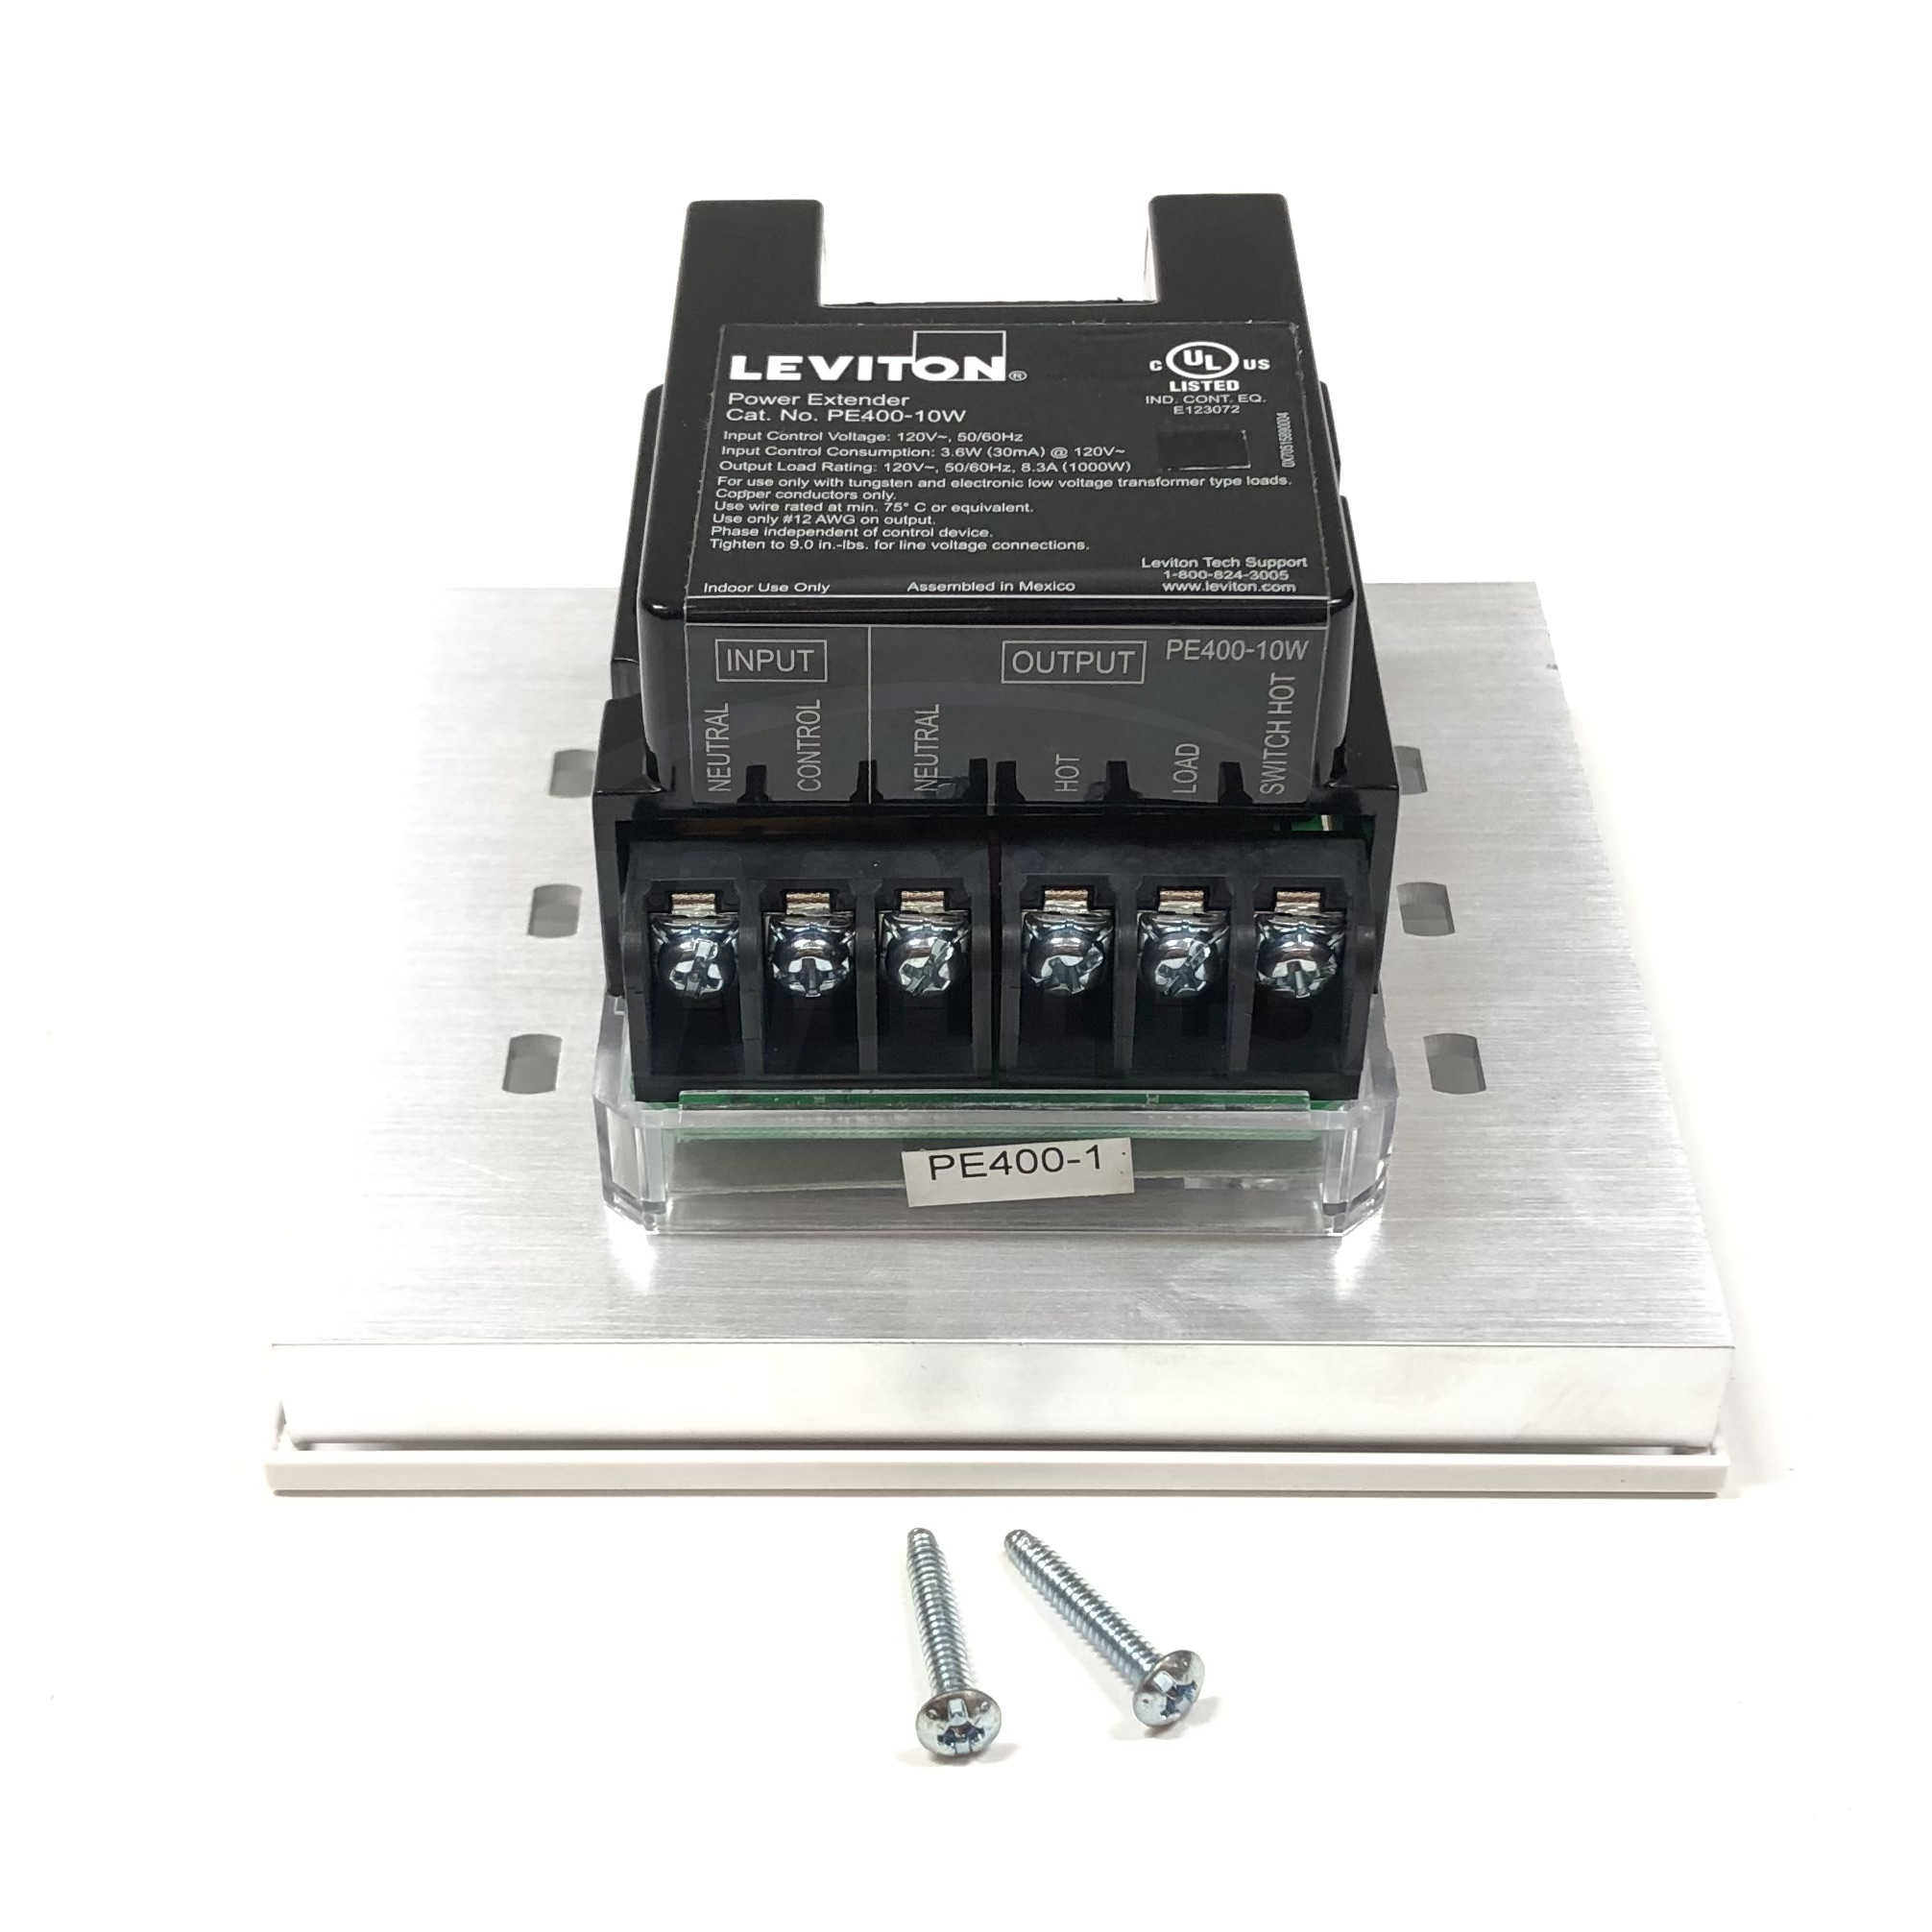 PE400-10W Leviton Power Extender Dimming Control V1.0 1000W/VA, 120V, 60Hz